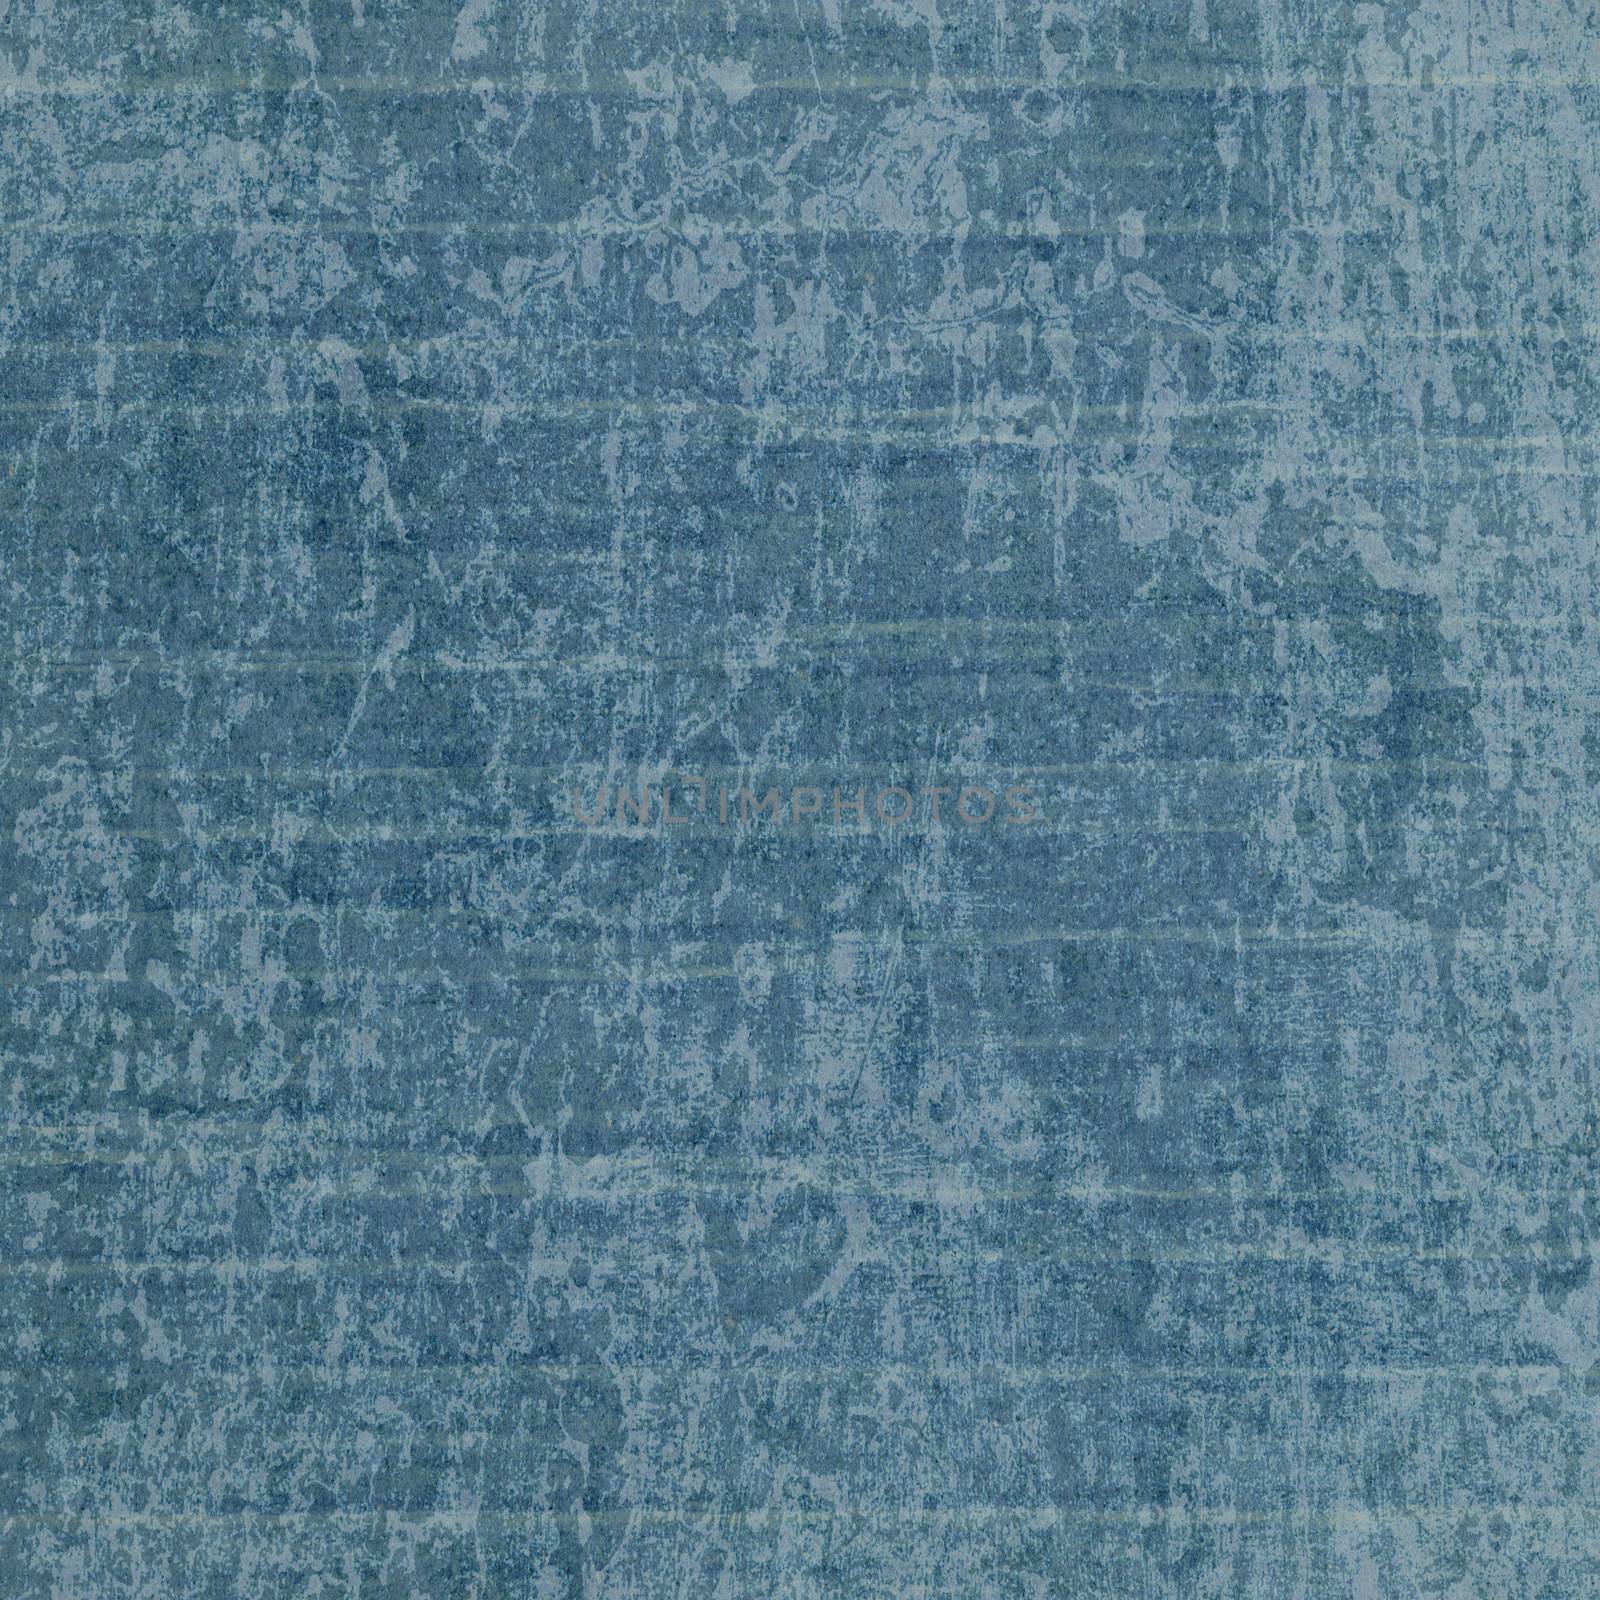 grunge blue  texture, distressed background